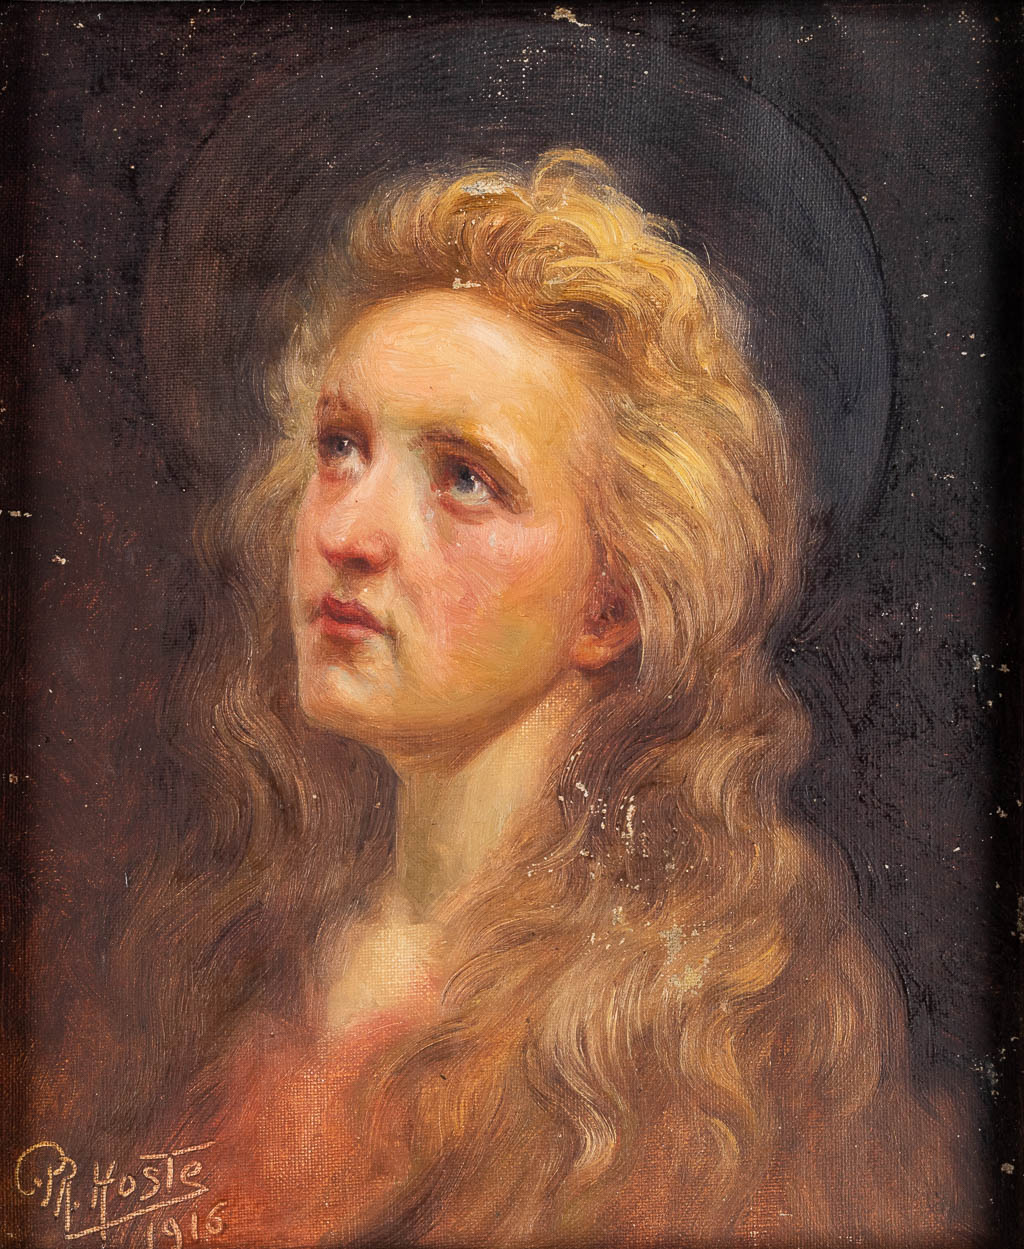 Constant Pr. HOSTE (1873-1917) 'Susanna' oil on canvas, maroufled on a panel. 1916 (W:20,5 x H:24,5 cm)